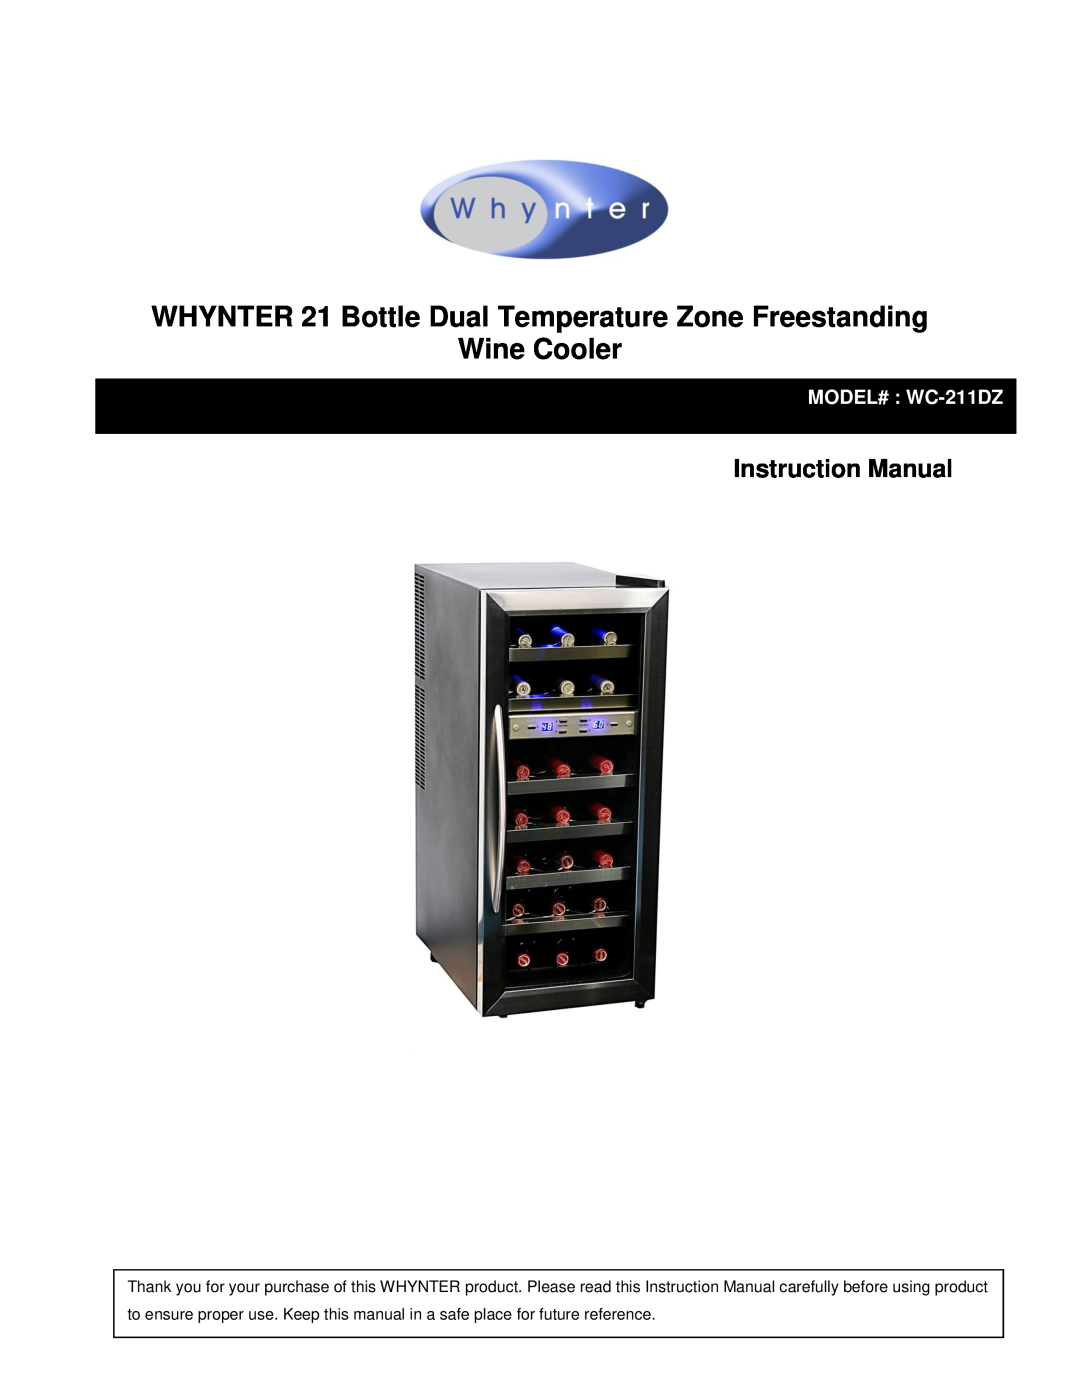 Whynter WZ-211DZ instruction manual WHYNTER 21 Bottle Dual Temperature Zone Freestanding Wine Cooler, MODEL# WC-211DZ 